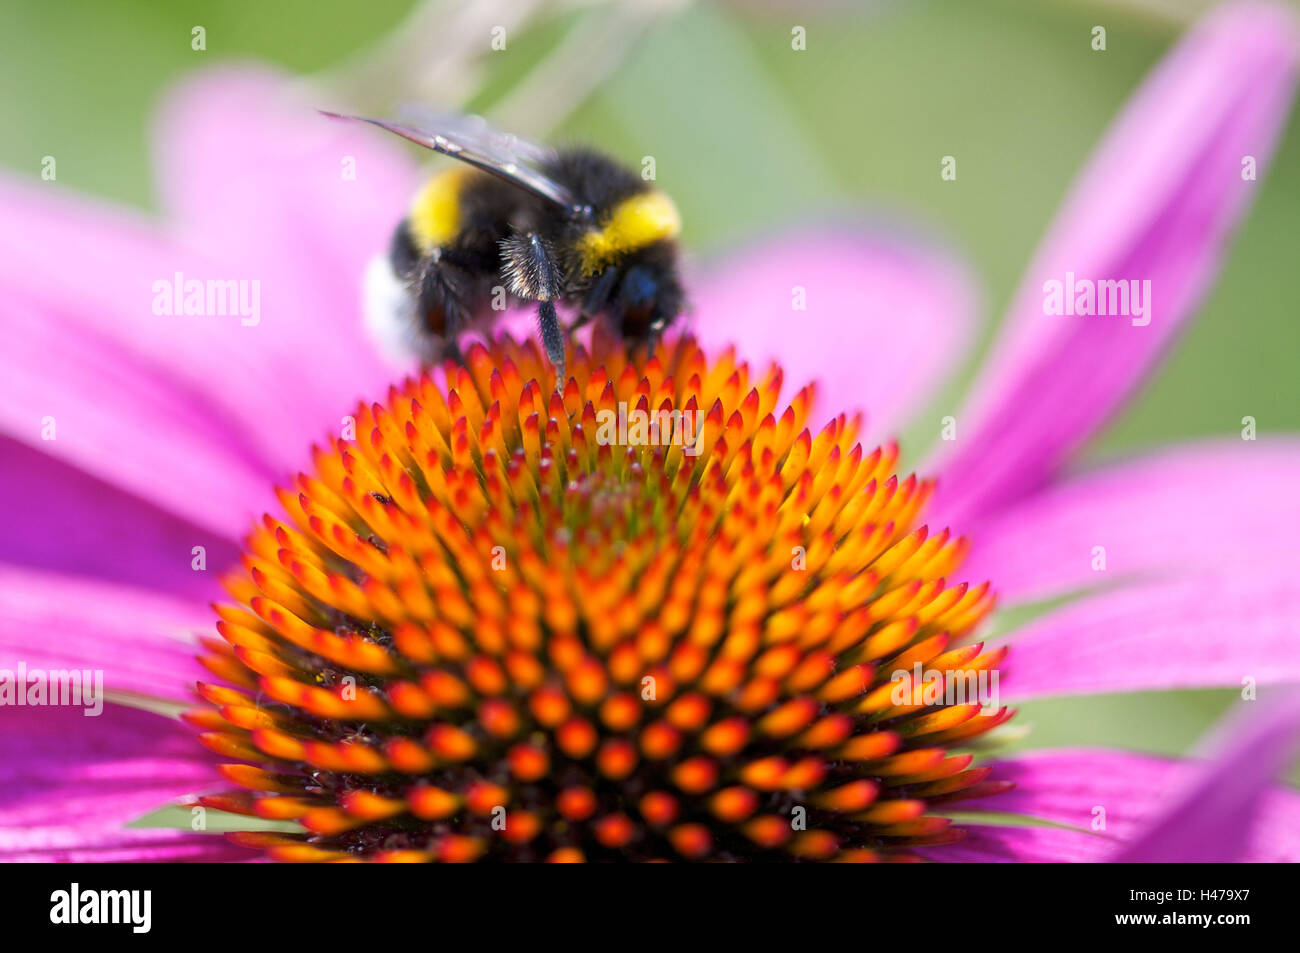 Bumblebee on Echinacea blossom, close-up, Stock Photo